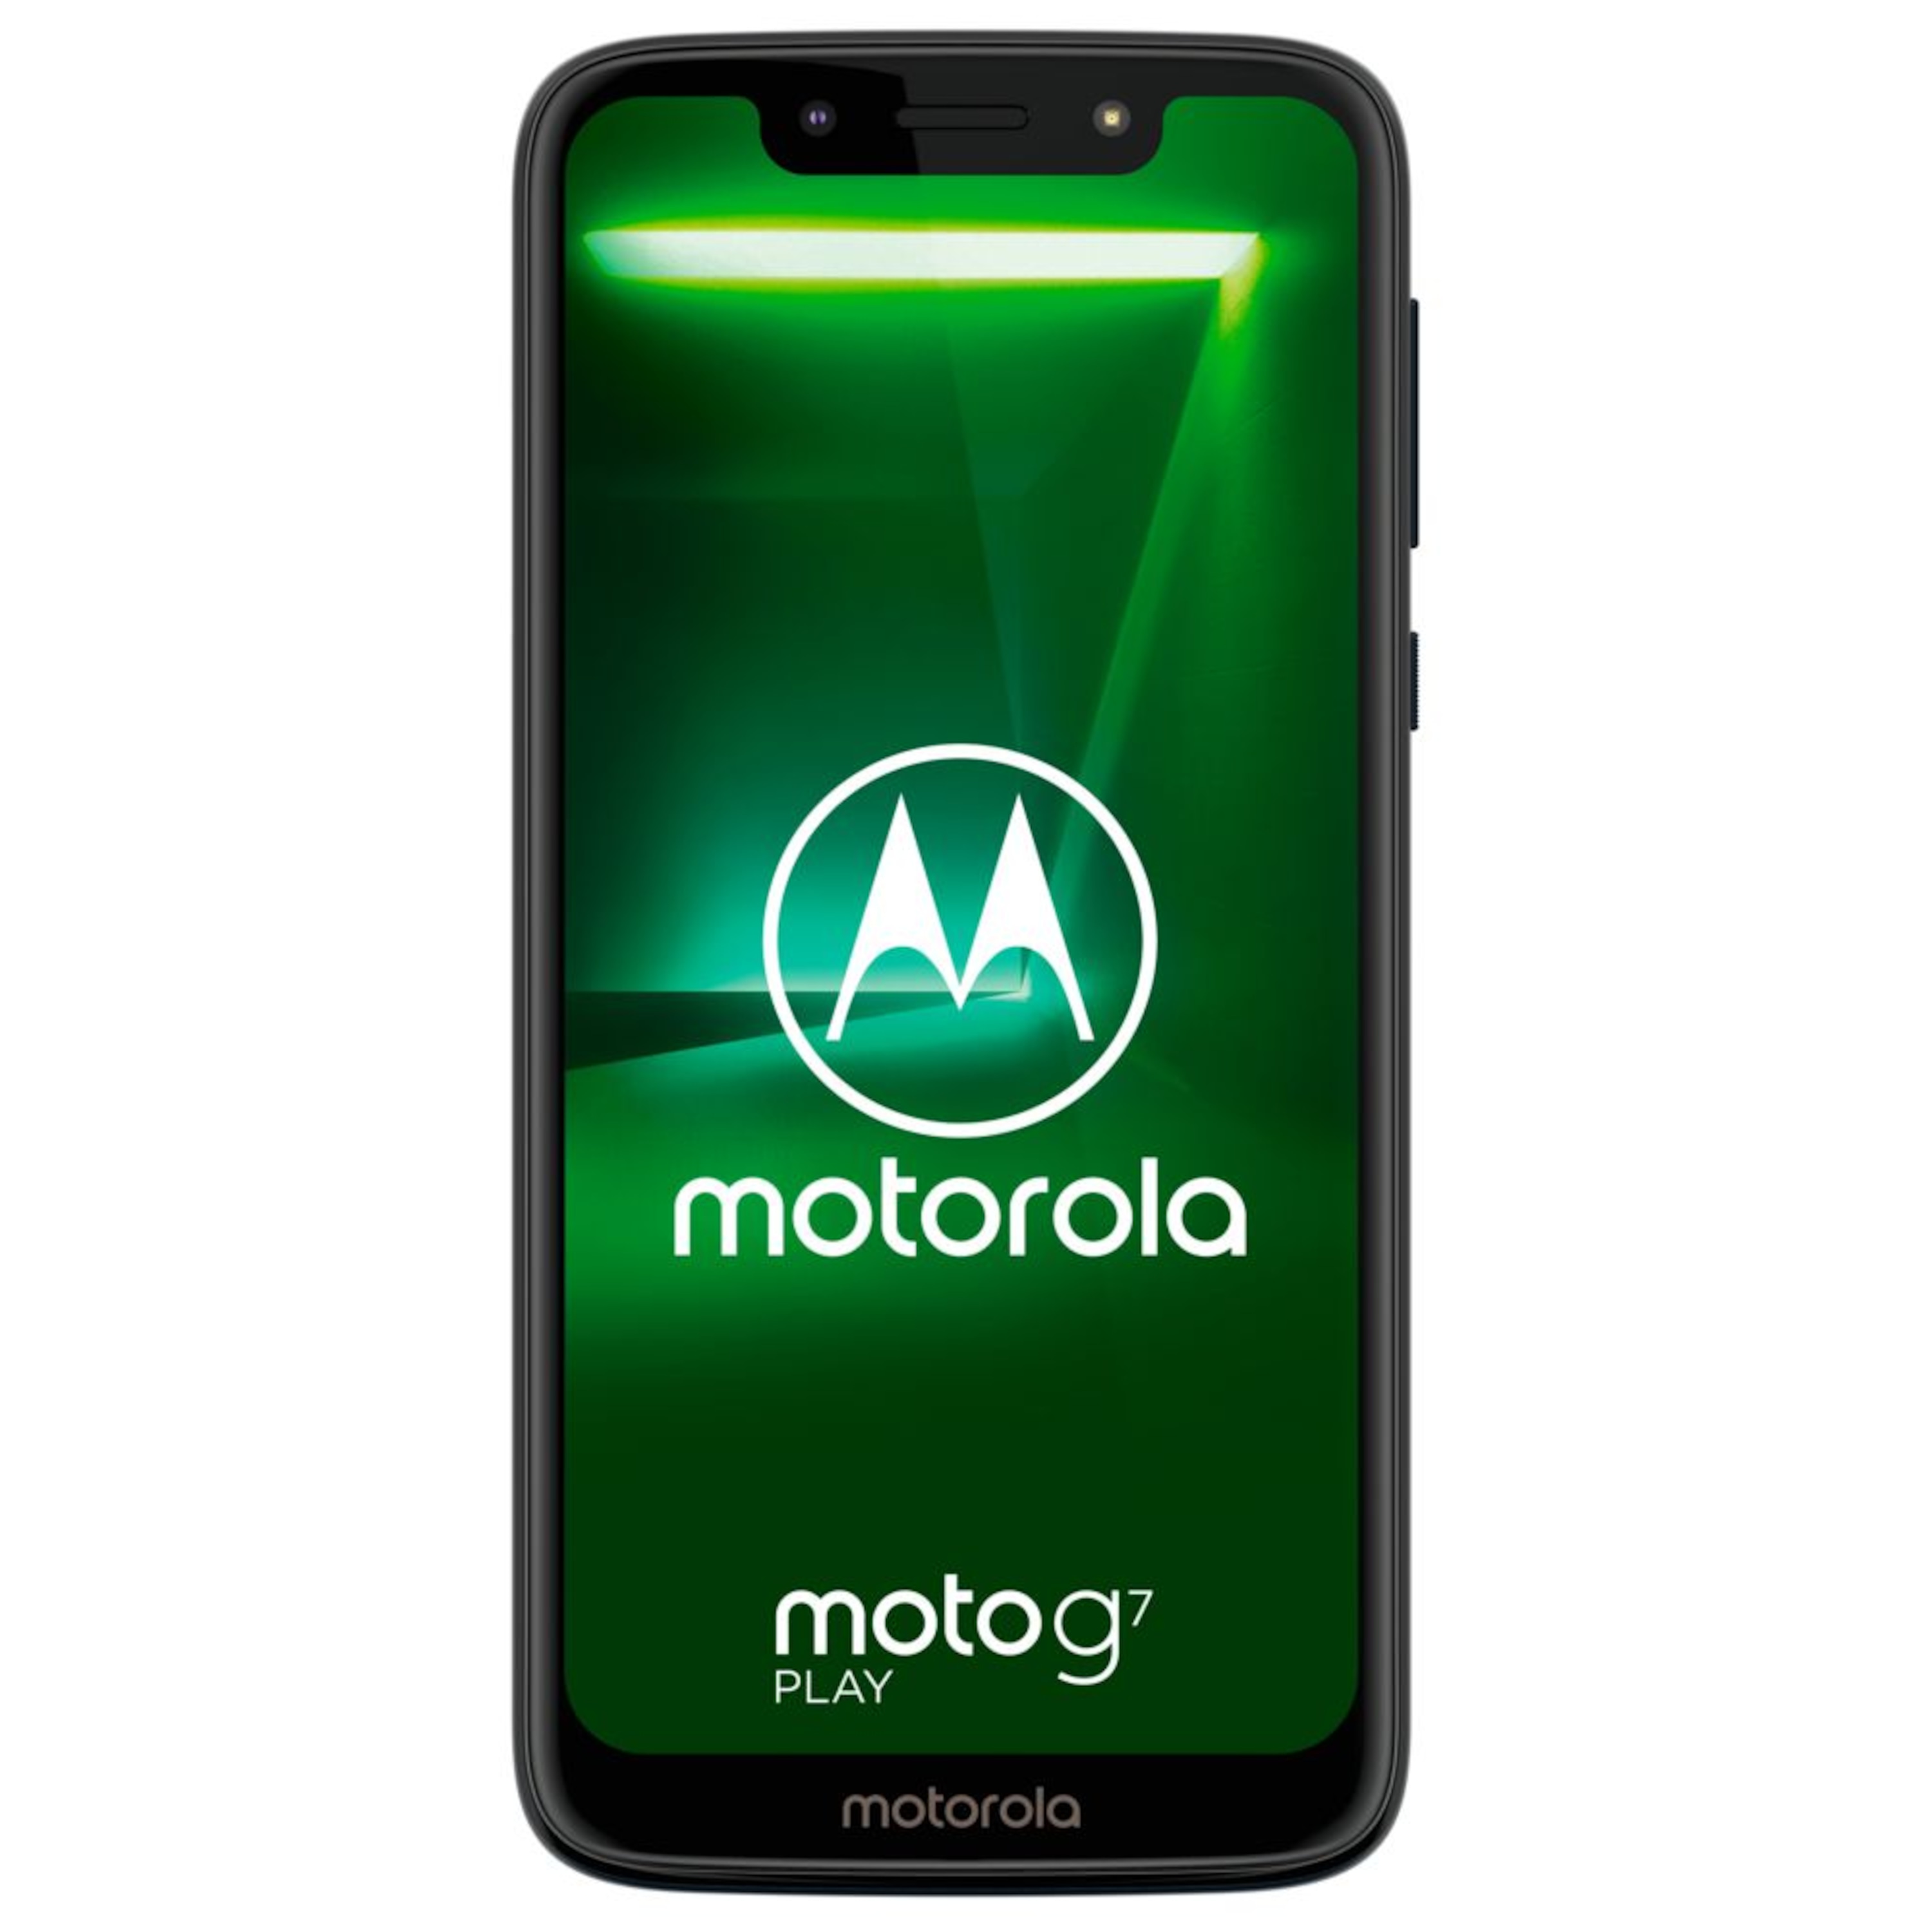 MOTOROLA moto g7 play Smartphone, 14,45 cm (5,69") Full-HD+ Display, Android™ 9.0, 32 GB Speicher, Octa-Core-Prozessor, Dual-SIM, LTE